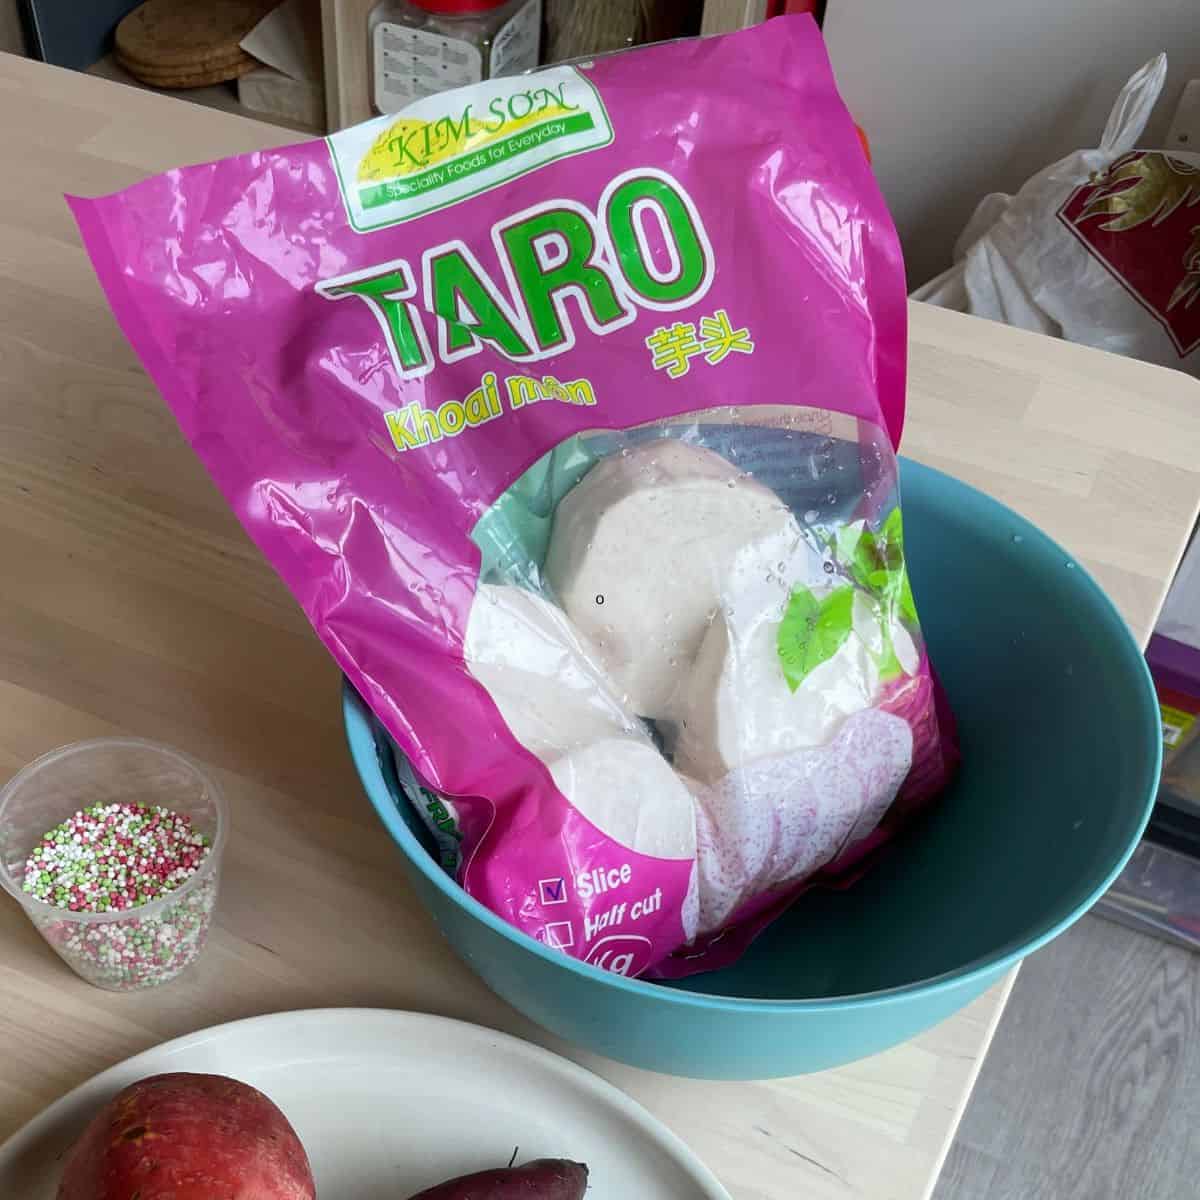 Taro slices purplish white